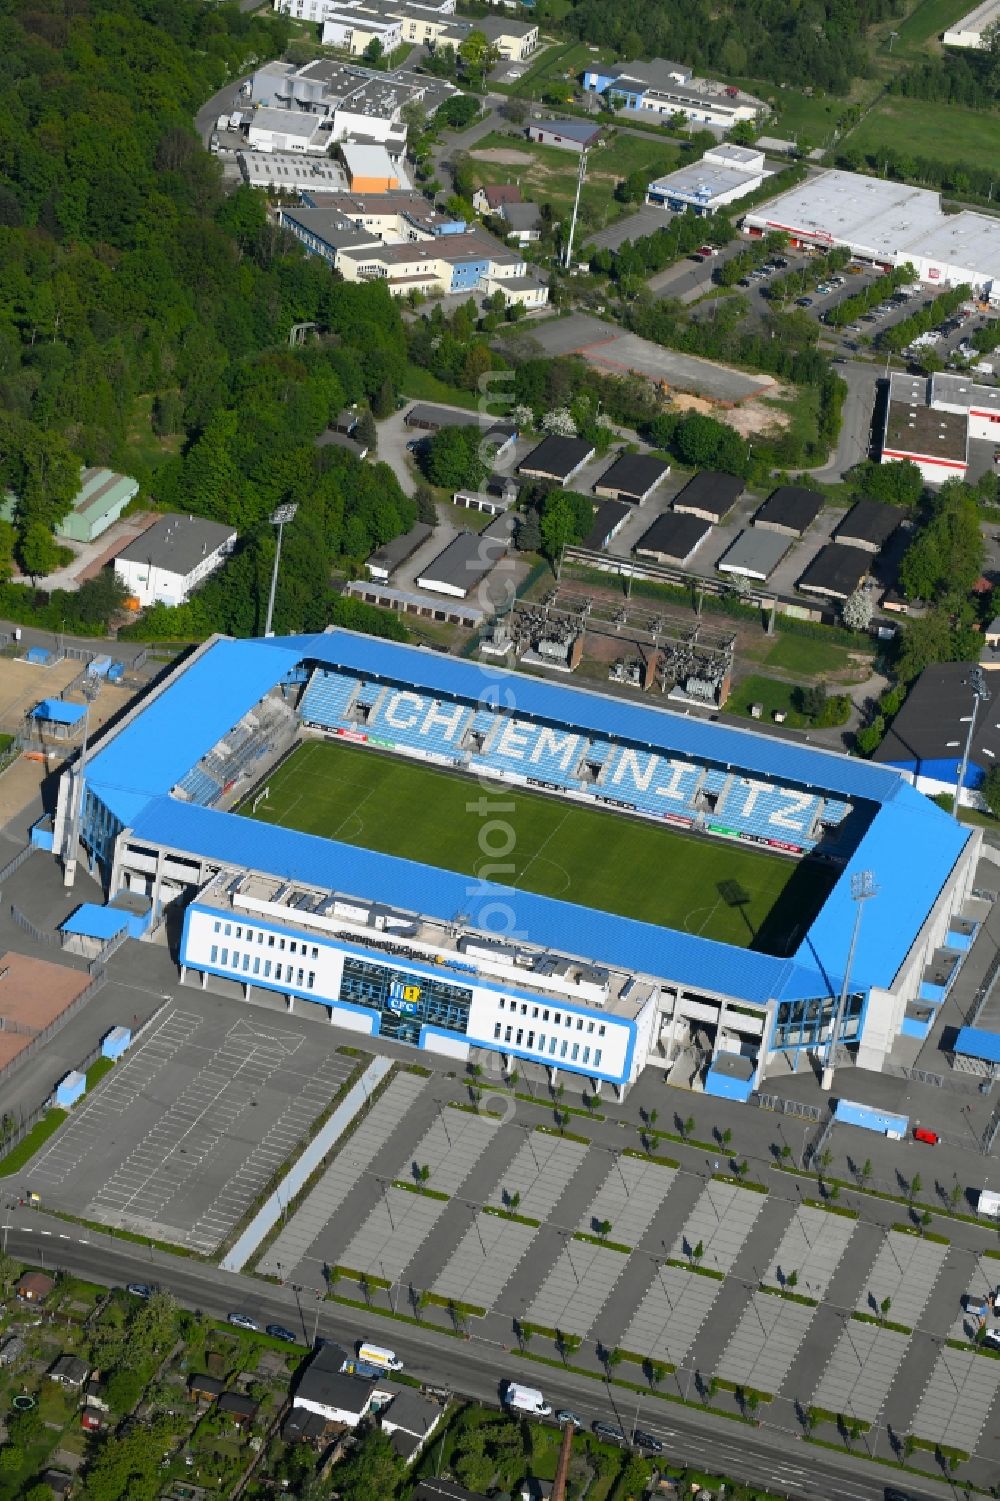 Aerial photograph Chemnitz - New building of the football stadium community4you ARENA of FC Chemnitz in Saxony